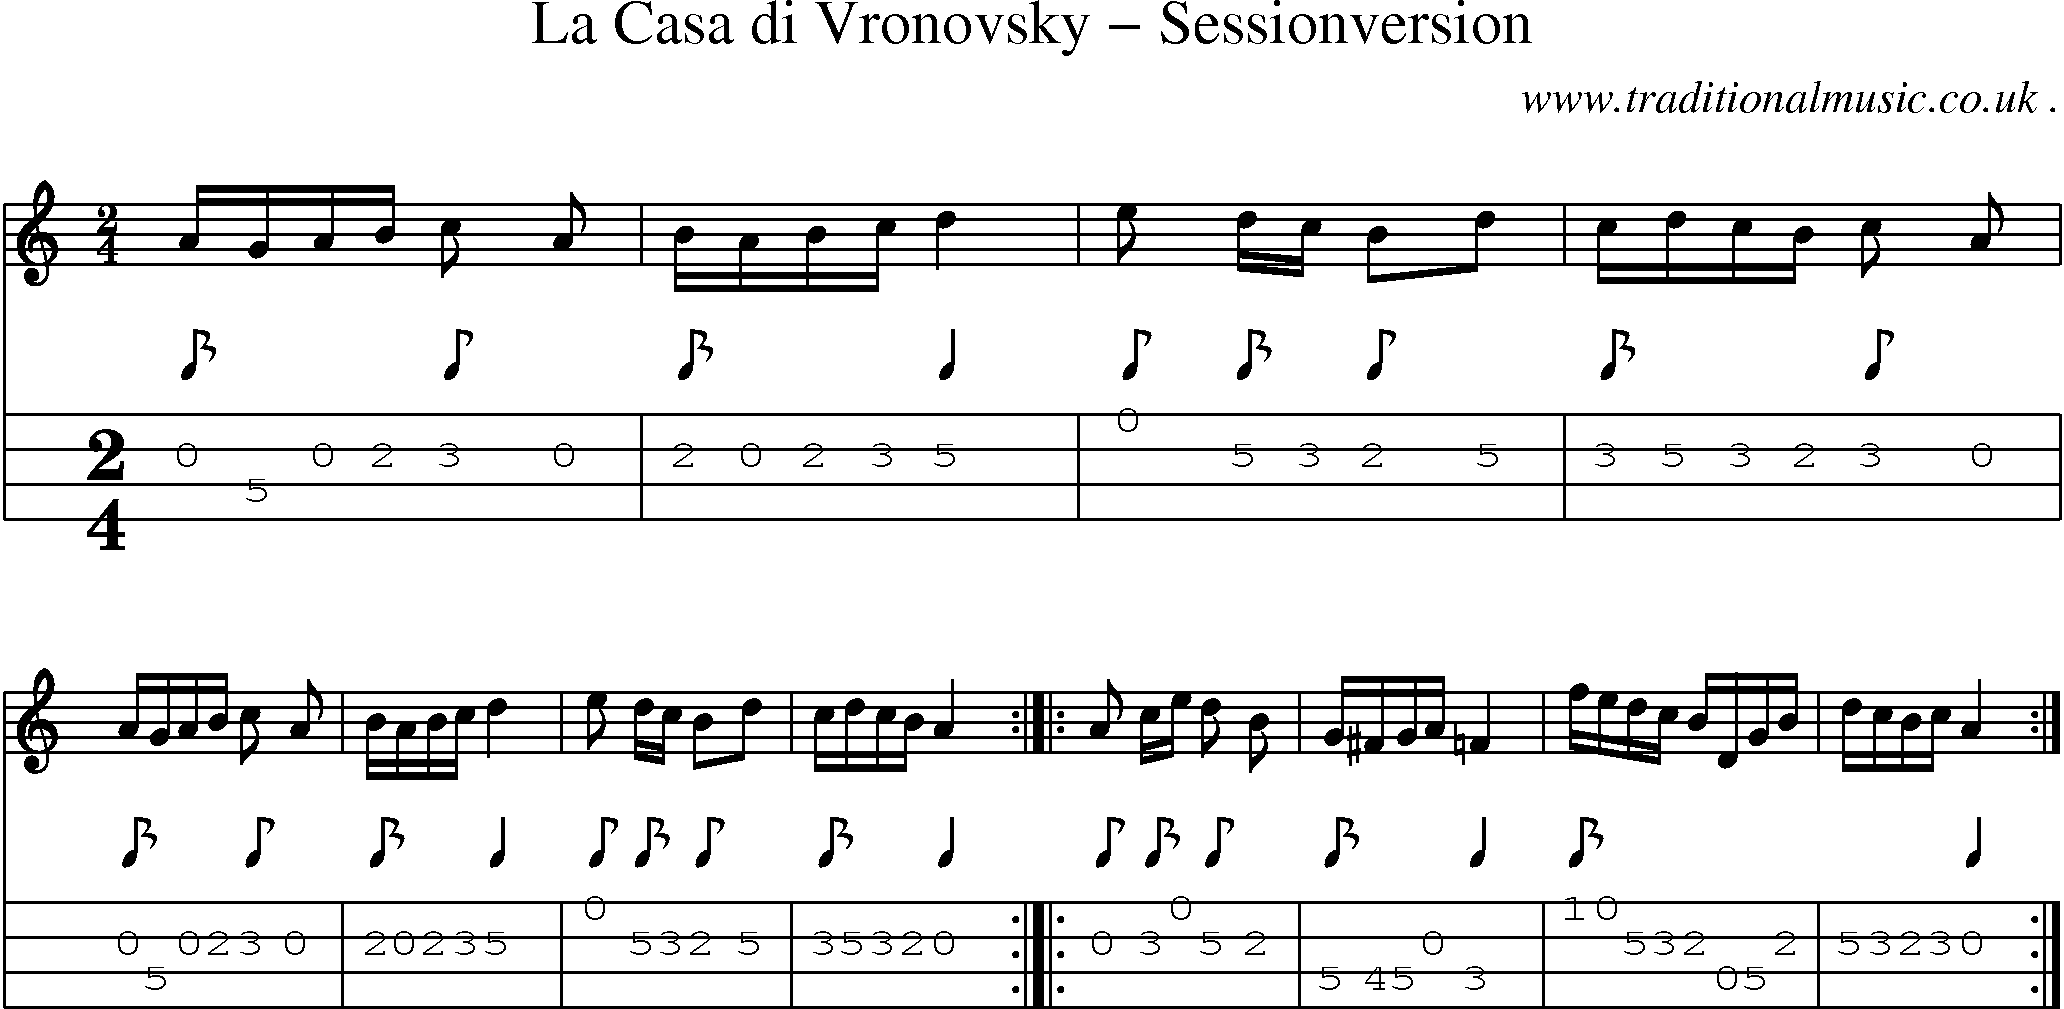 Sheet-Music and Mandolin Tabs for La Casa Di Vronovsky Sessionversion